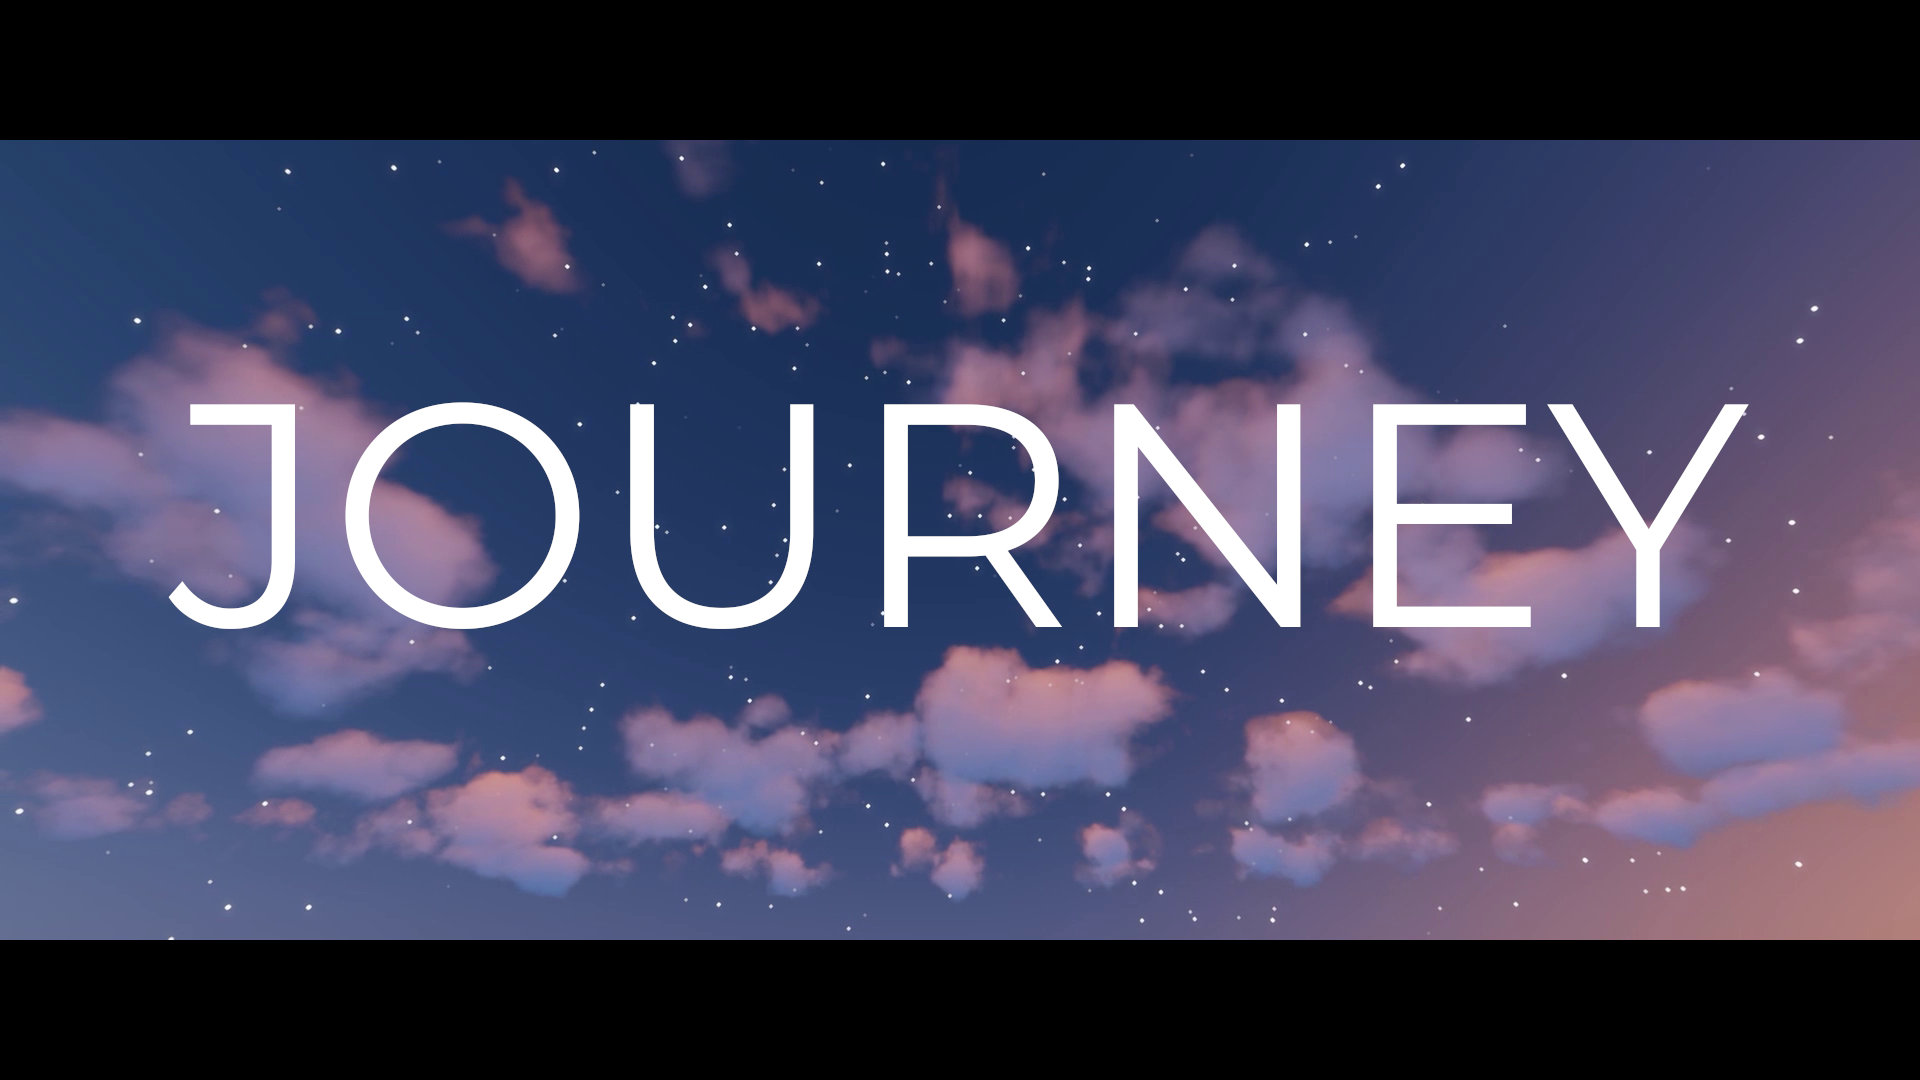 Download Journey 1.02 for Minecraft 1.17.1